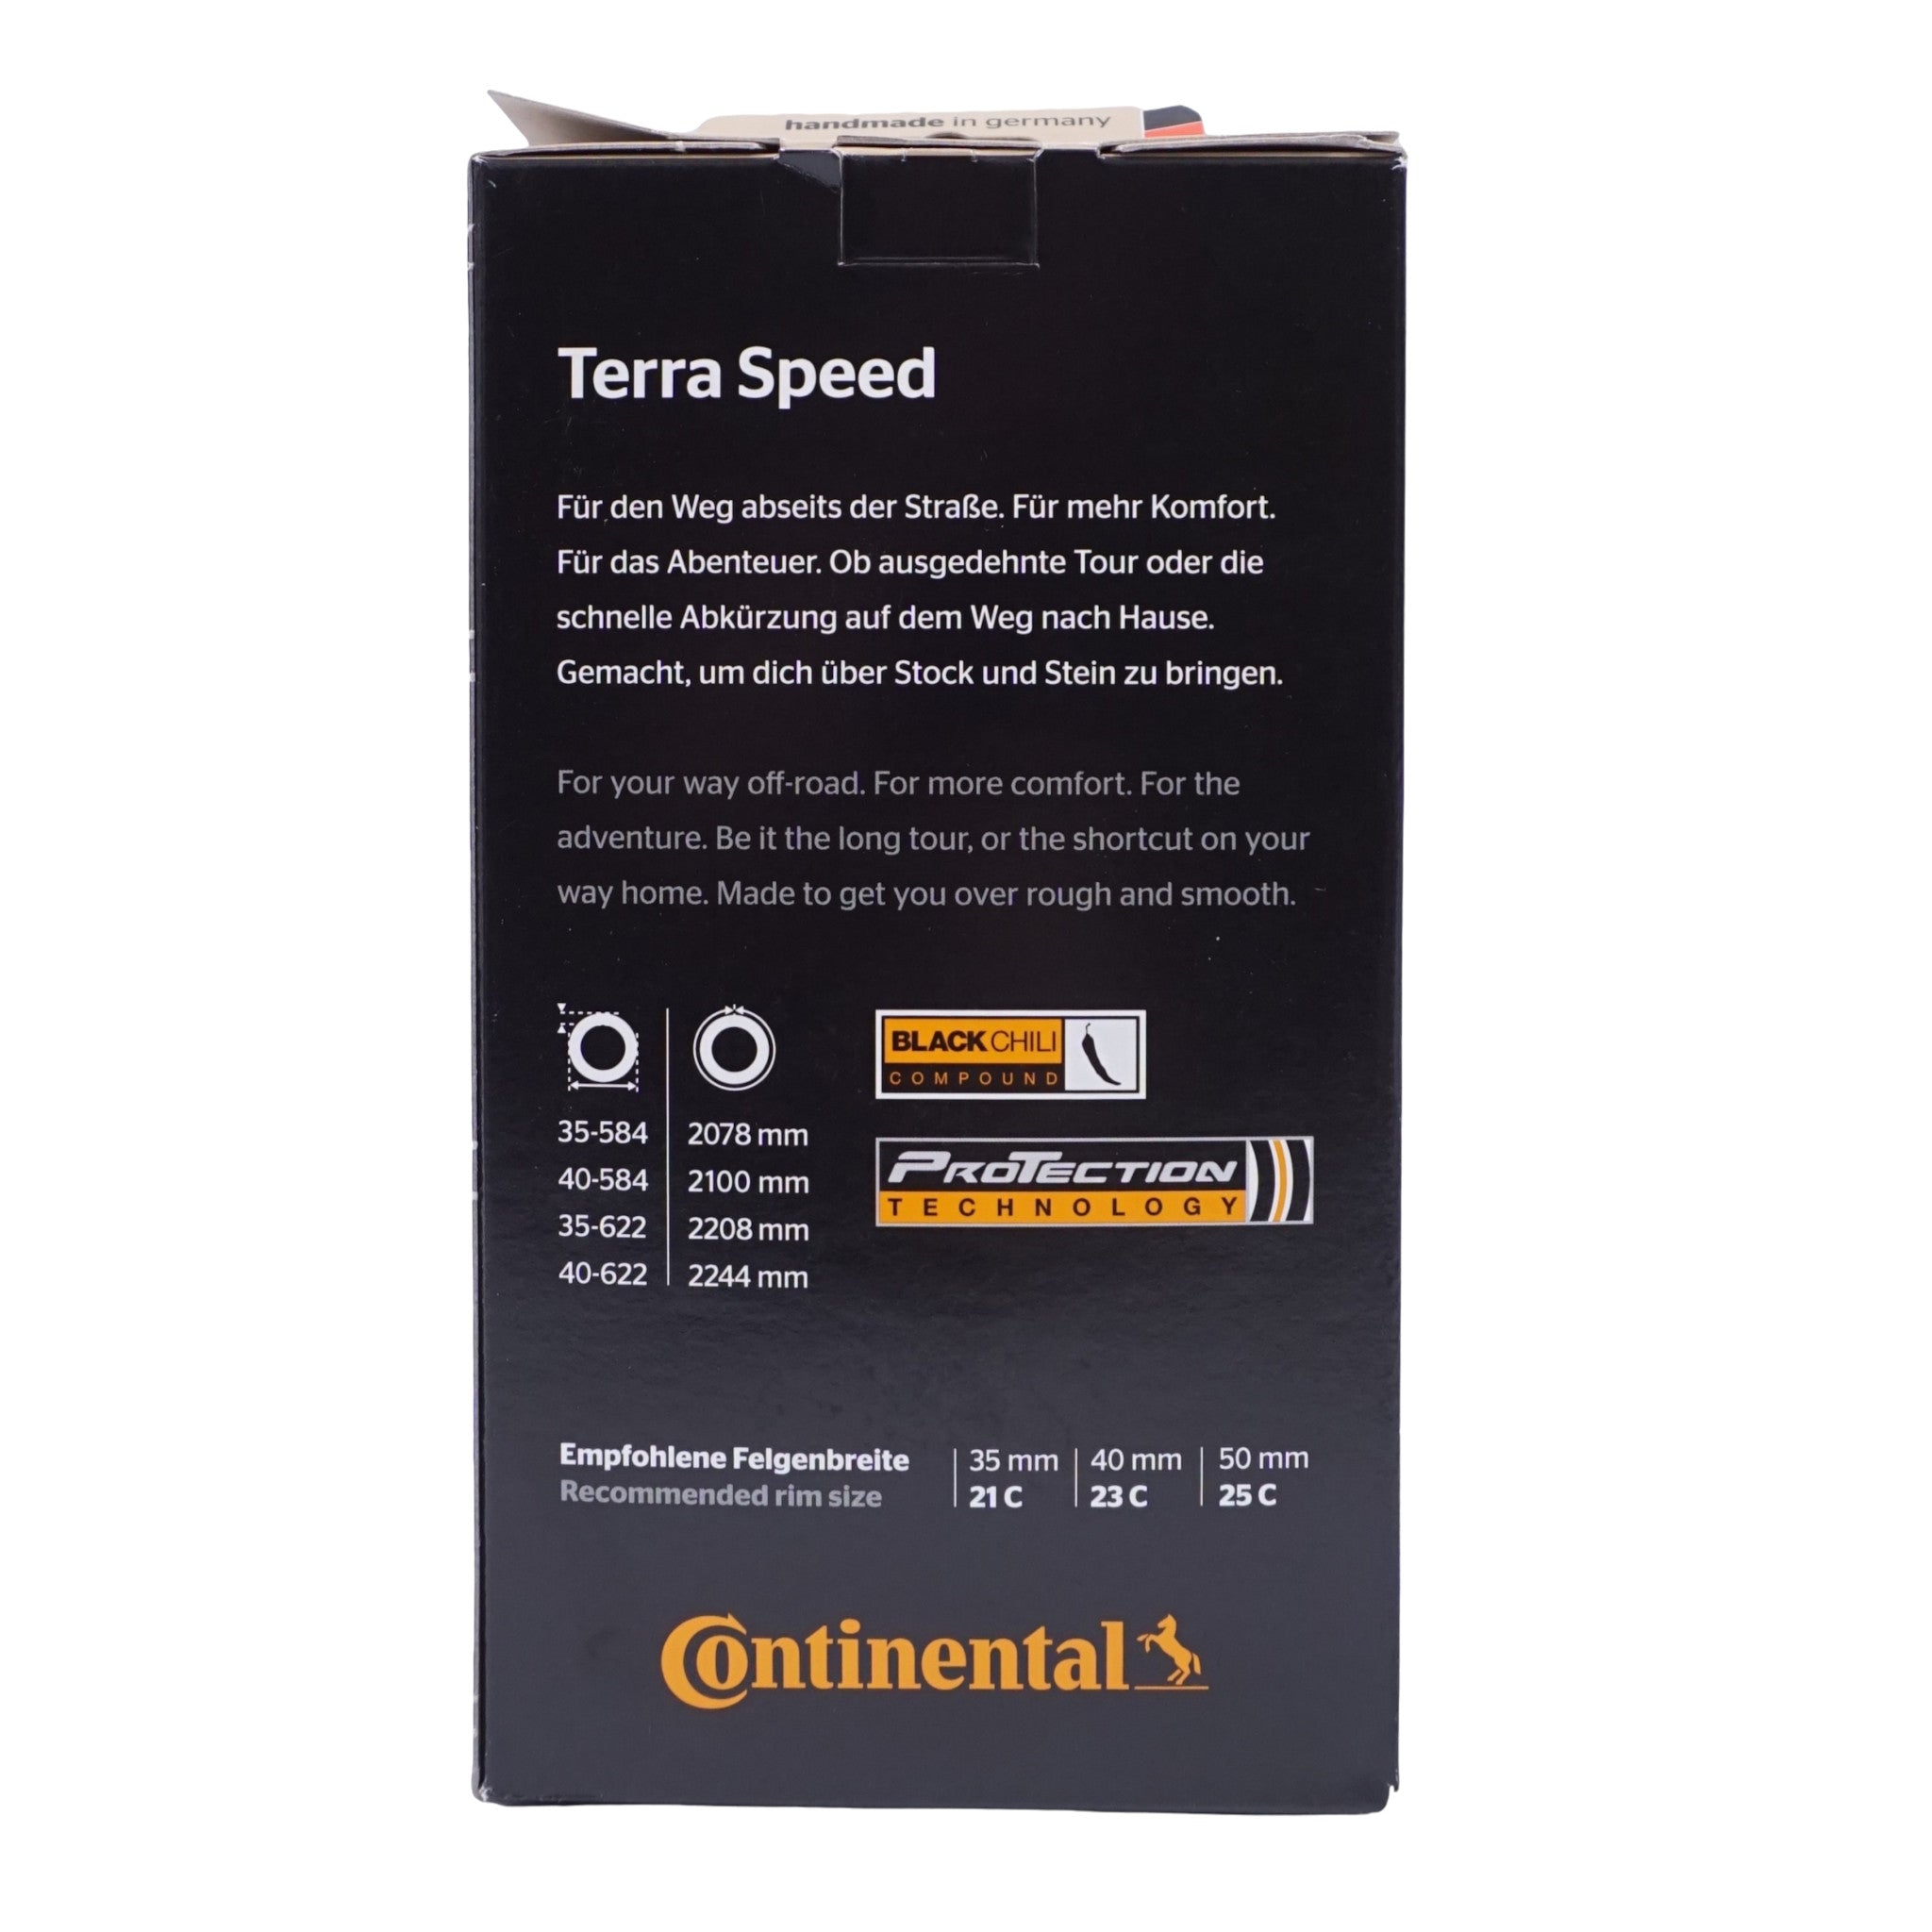 Continental Terra Speed 700c Tubeless Folding BlackChili ProTection Bike Tire - The Bikesmiths